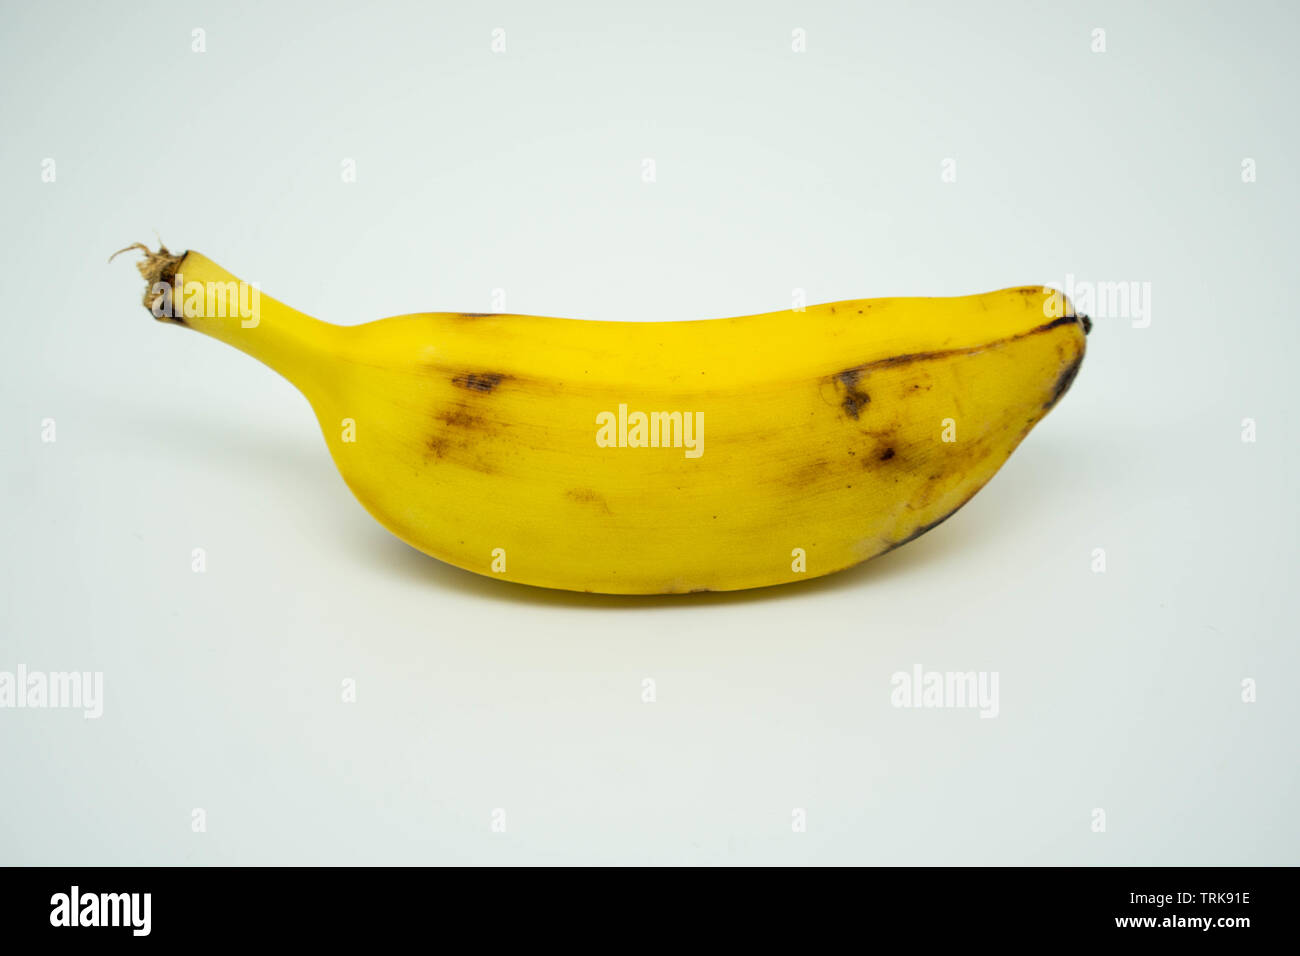 single ripe short banana on an isolated white background Stock Photo - Alamy